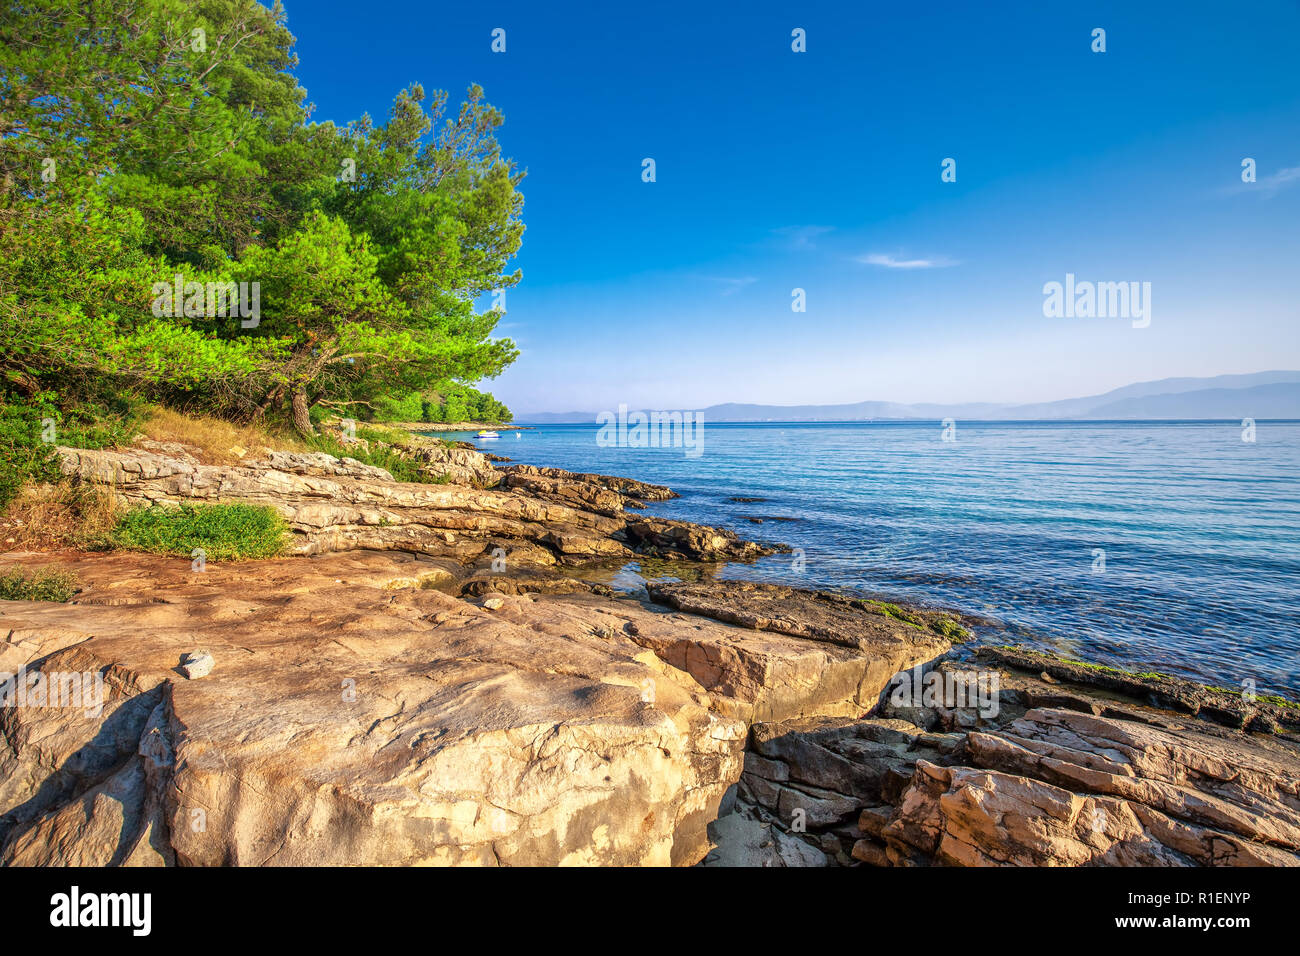 Stone beach on Brac island with turquoise clear ocean water, Supetar, Brac, Croatia Stock Photo